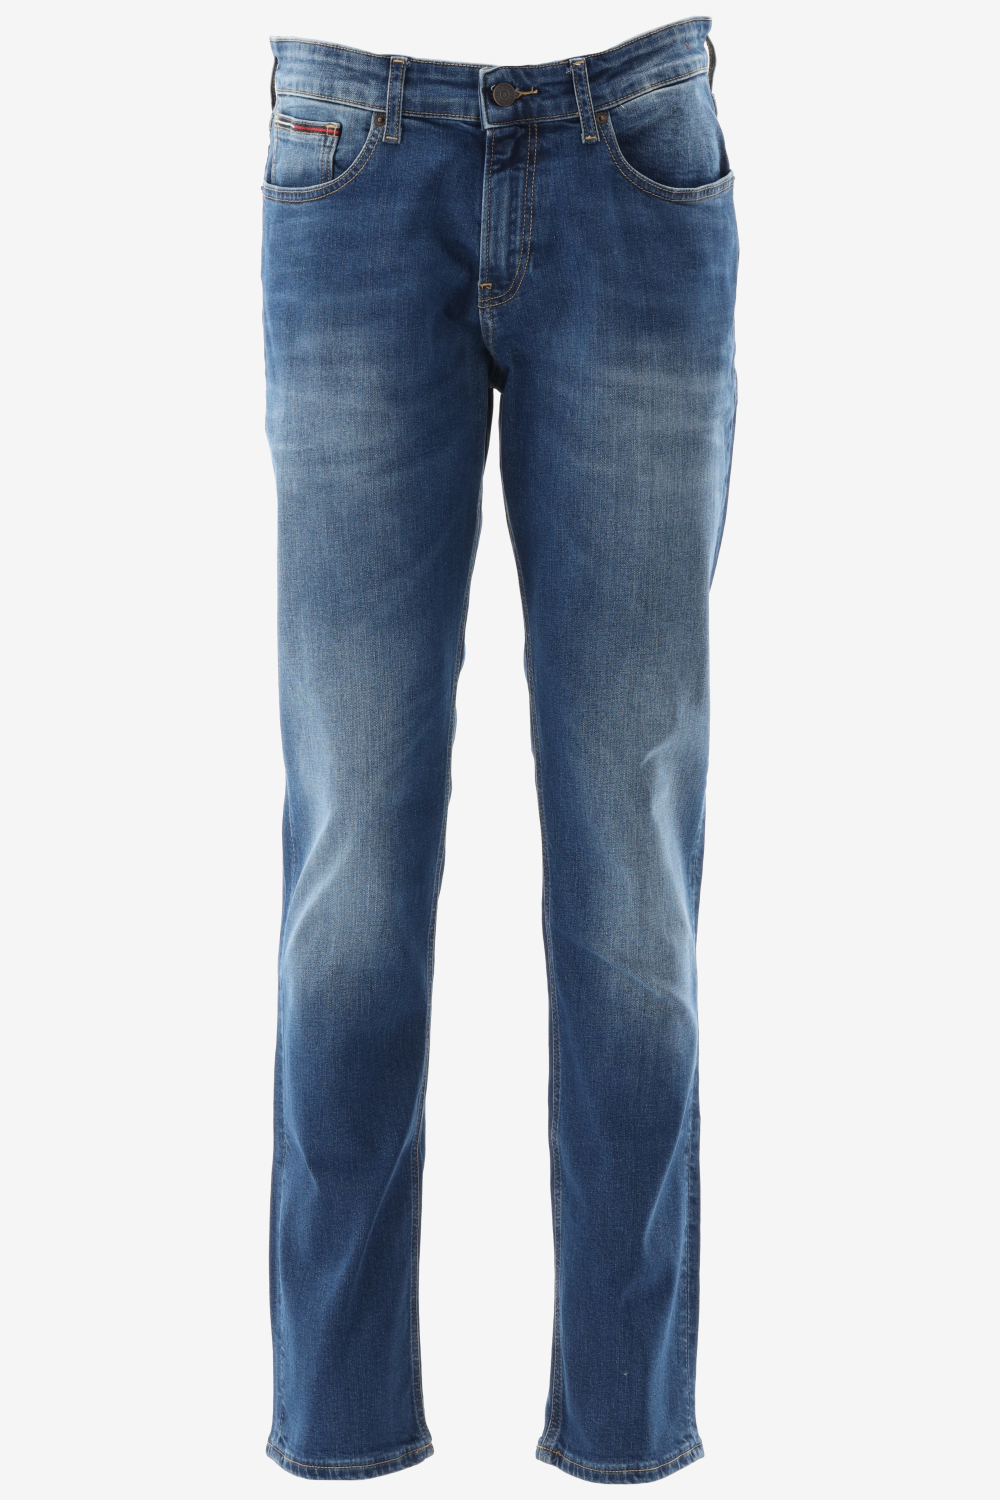 Tommy hilfiger straight fit ryan straight fit jeans maat 34-L36